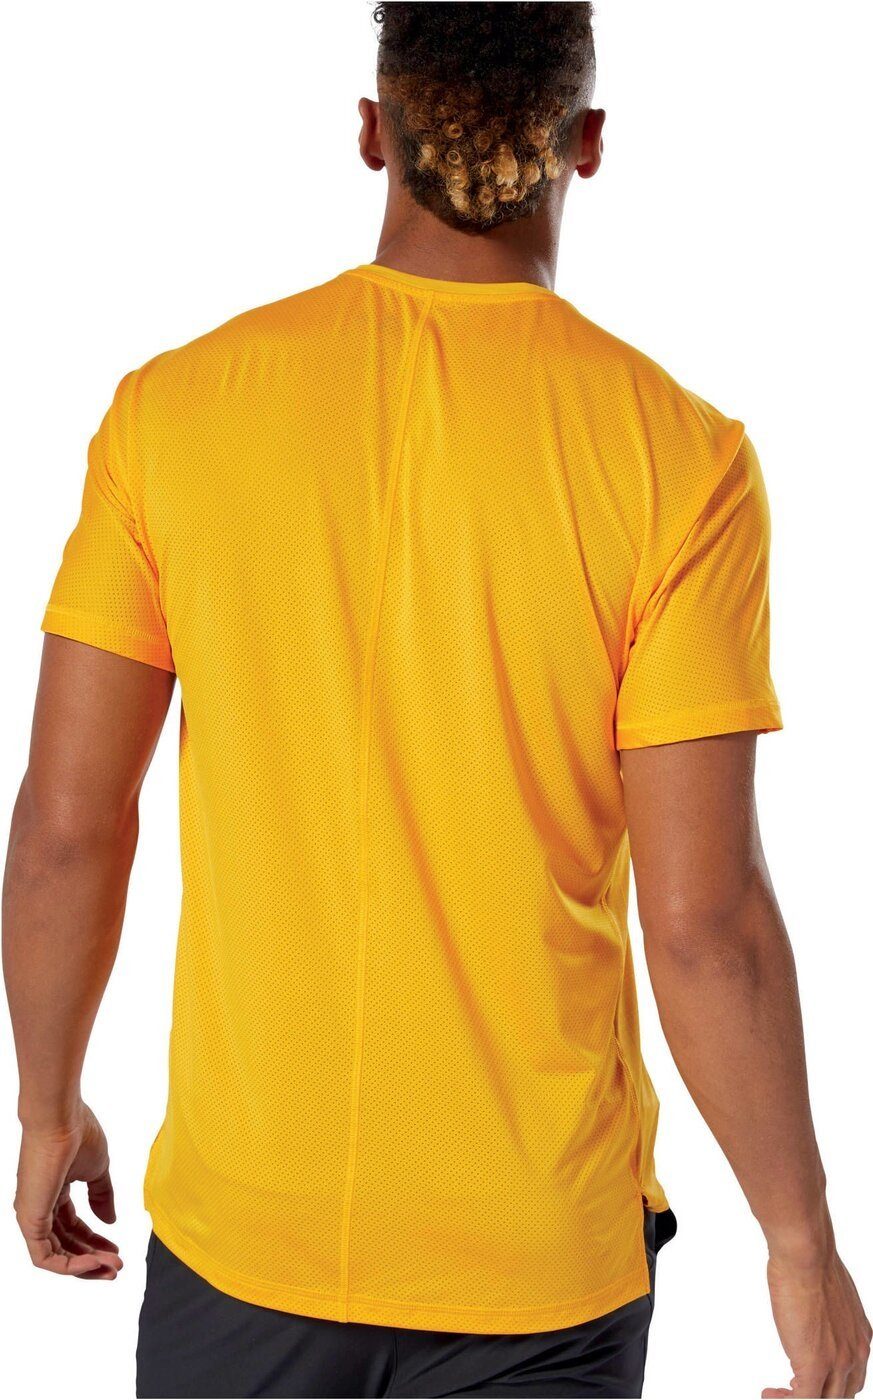 Reebok ACTIVCHILL Herren Sportshirt T-Shirt Freizeitshirt T-Shirt REEBOK Laufshirt